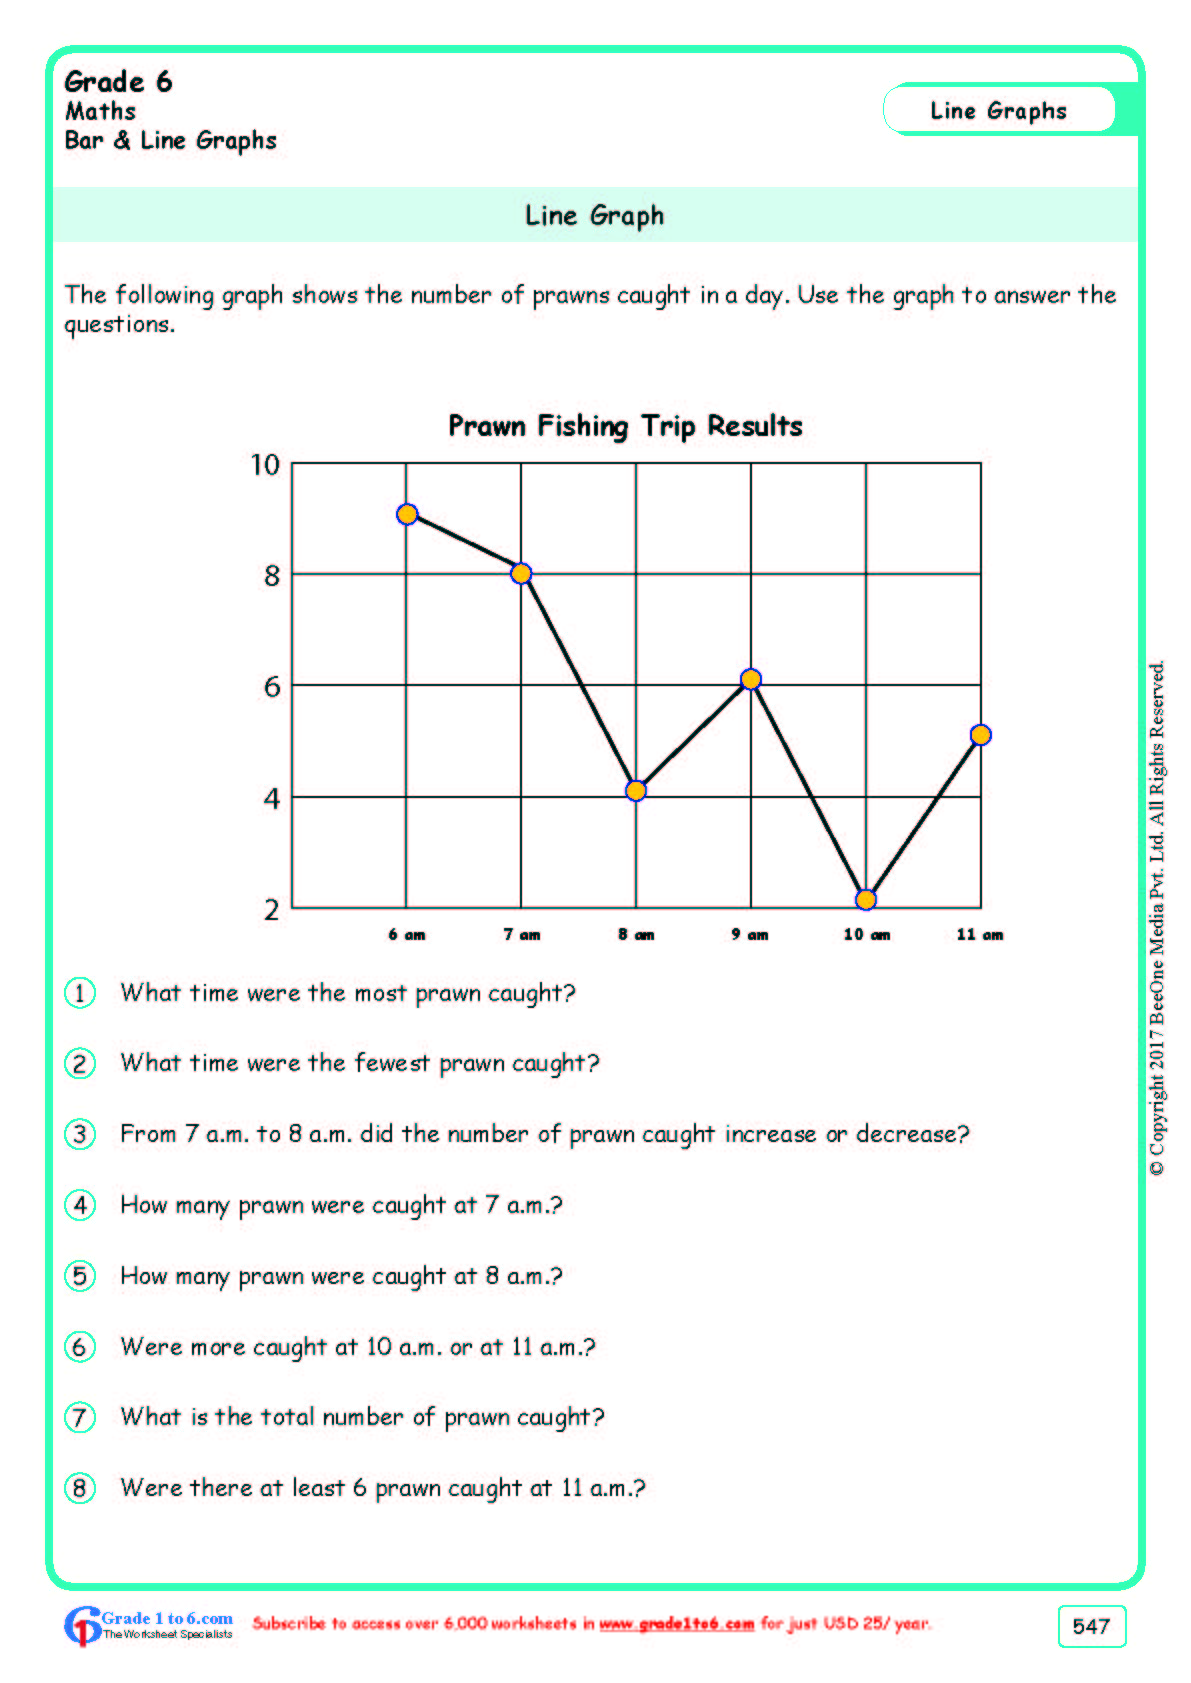 grade-6-line-graphs-worksheets-www-grade1to6